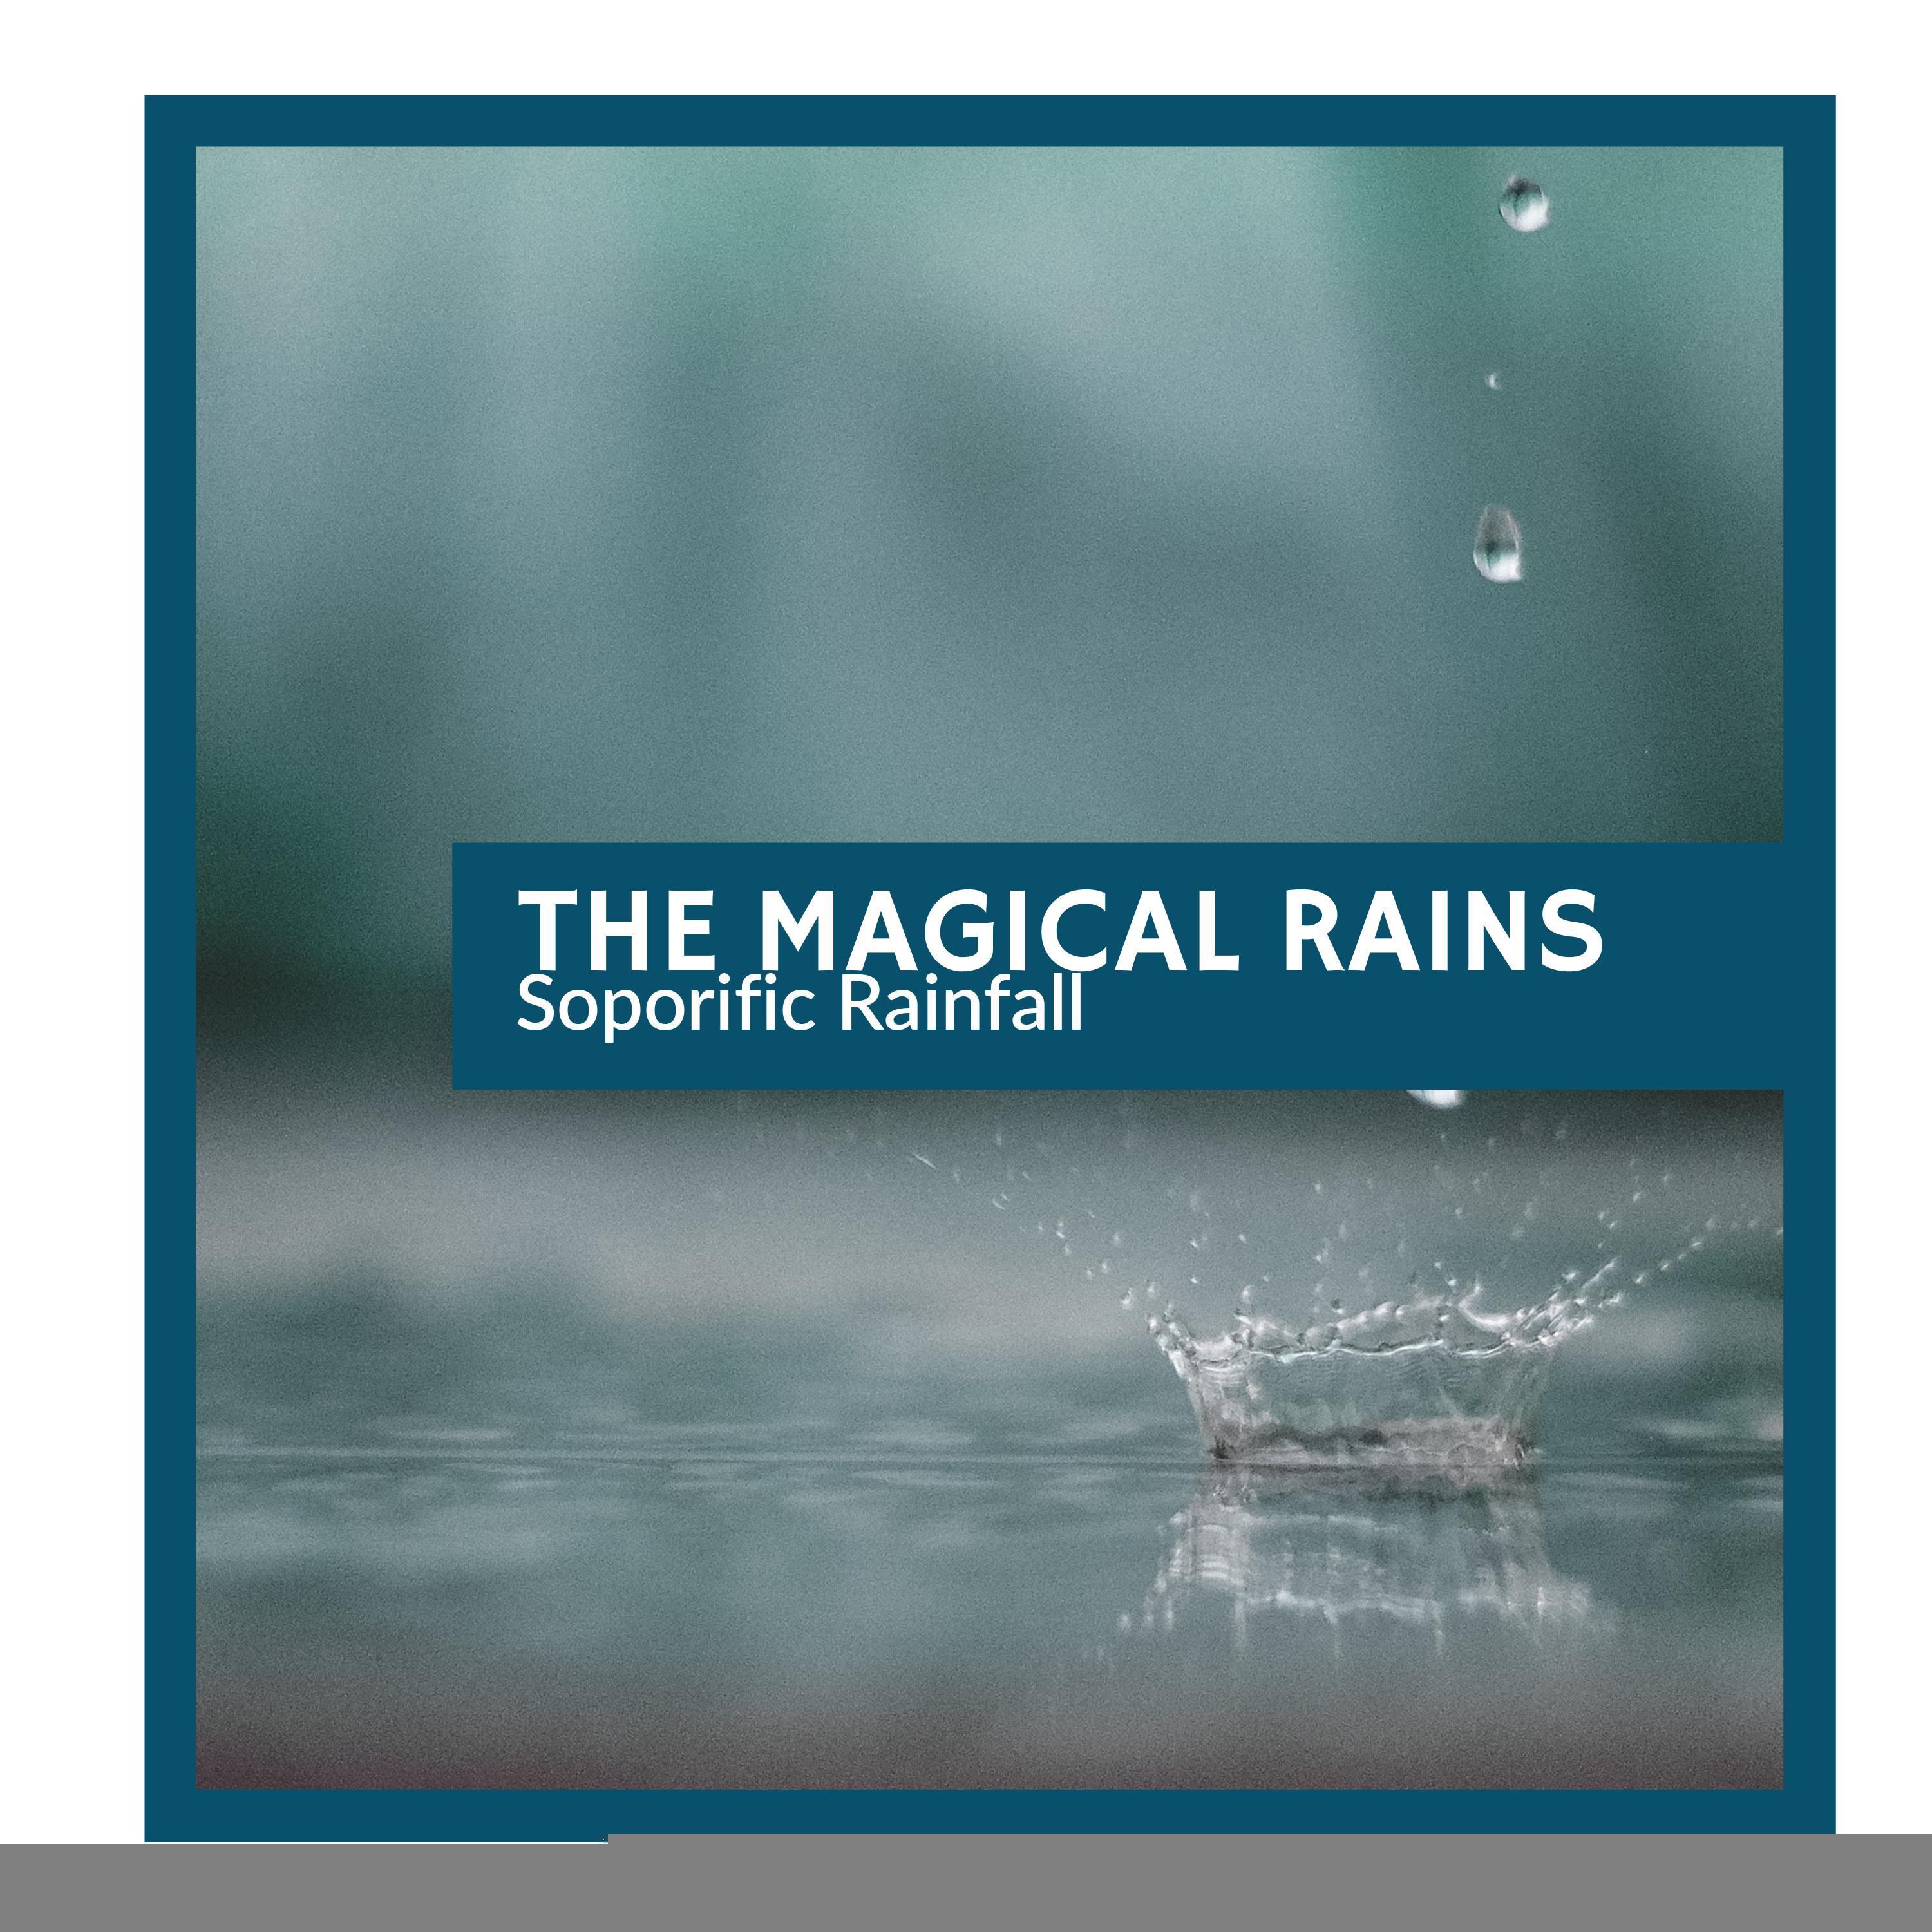 Superb Rain Healing Project - Hopless Rain and Thunder